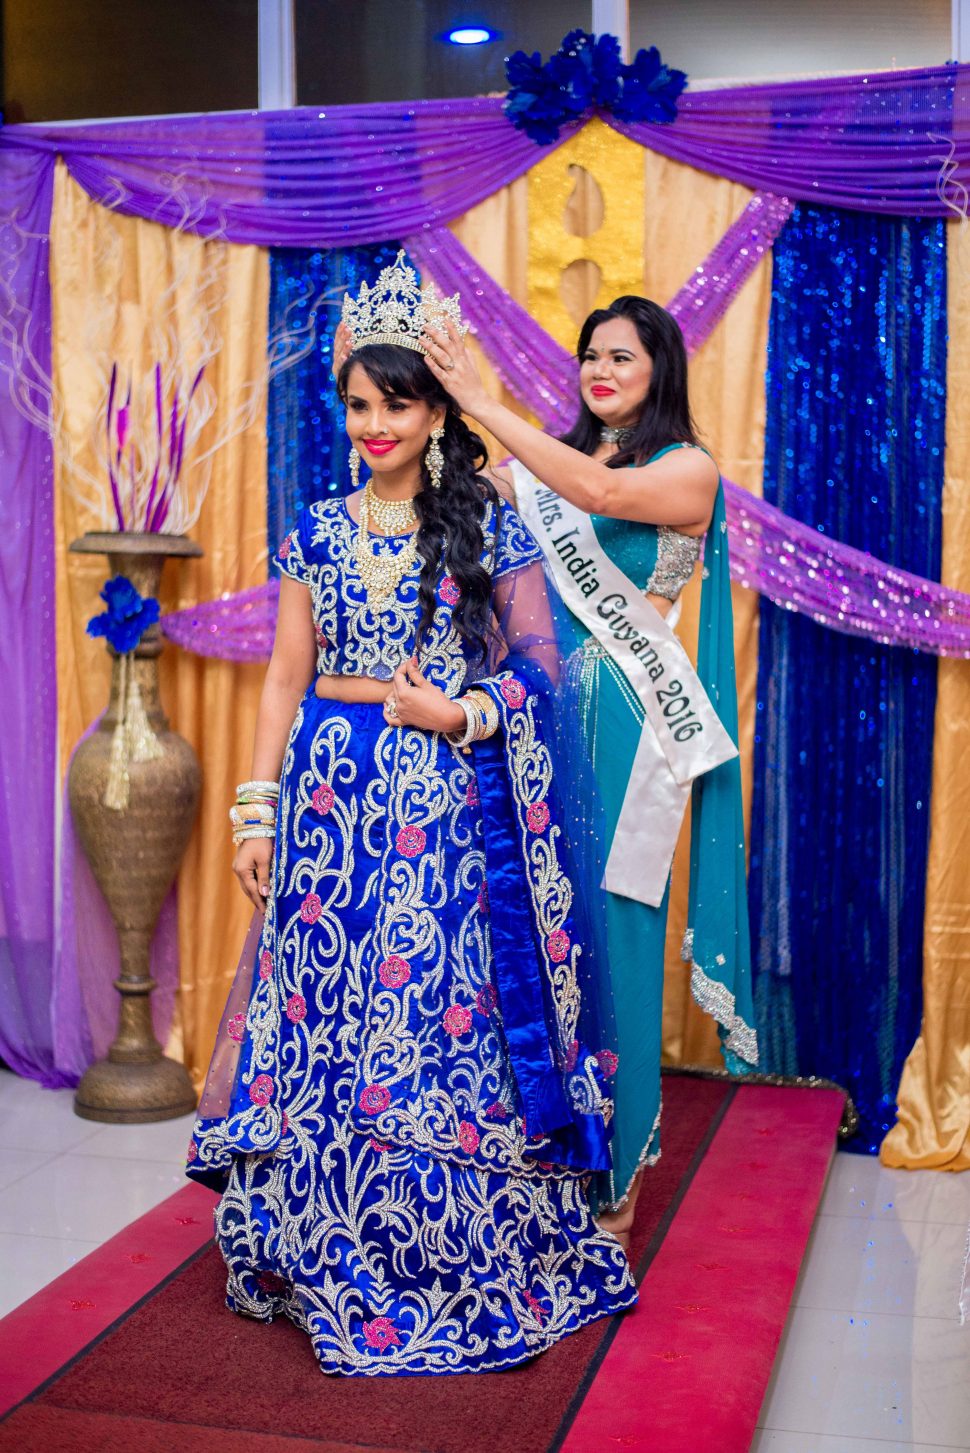 Shivanie Latchman being crowned the new Mrs India Guyana by Mrs. India Guyana 2016 Samantha Singh. Photos taken by photographer – Saajid Husani
